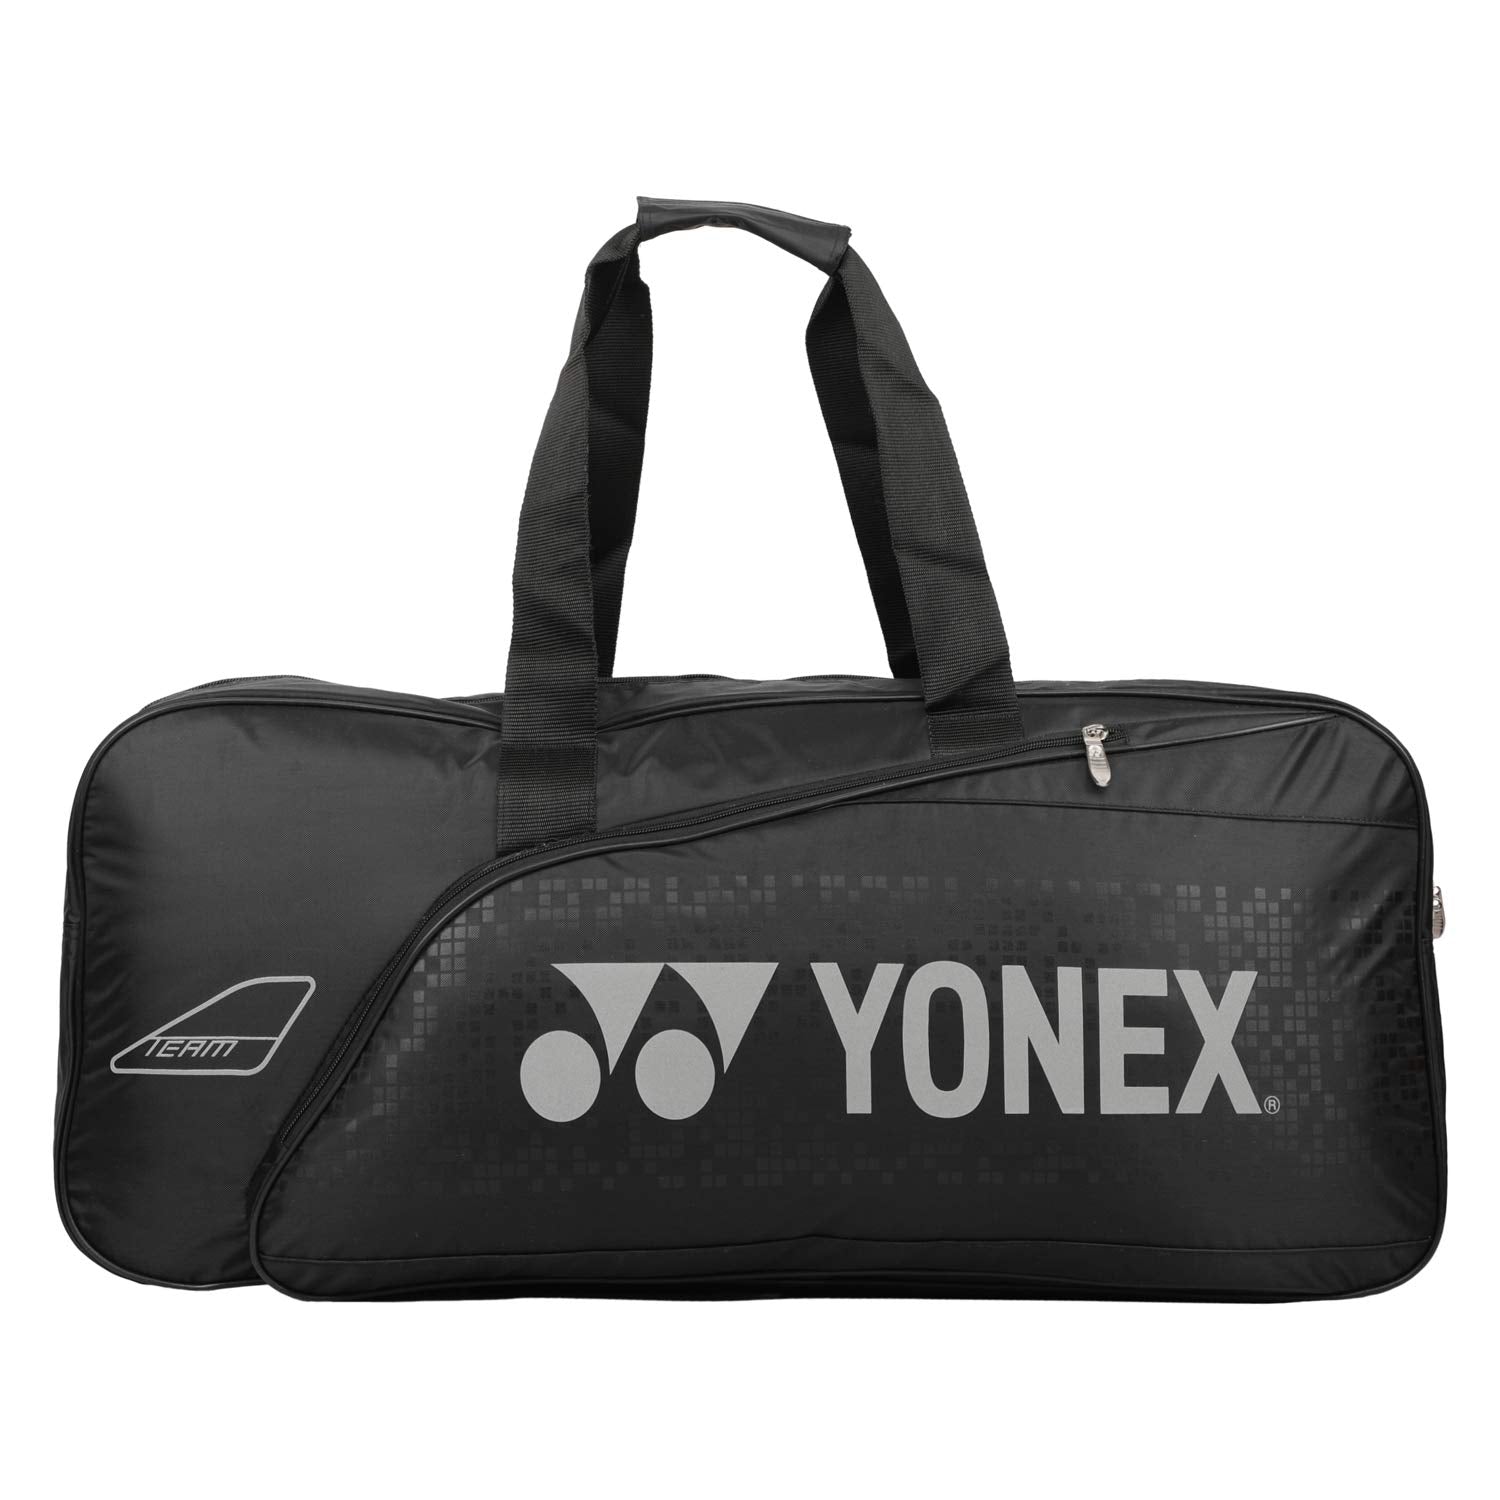 Yonex SUNR4911TH Team Tournament Badminton Kitbag, Black - Best Price online Prokicksports.com